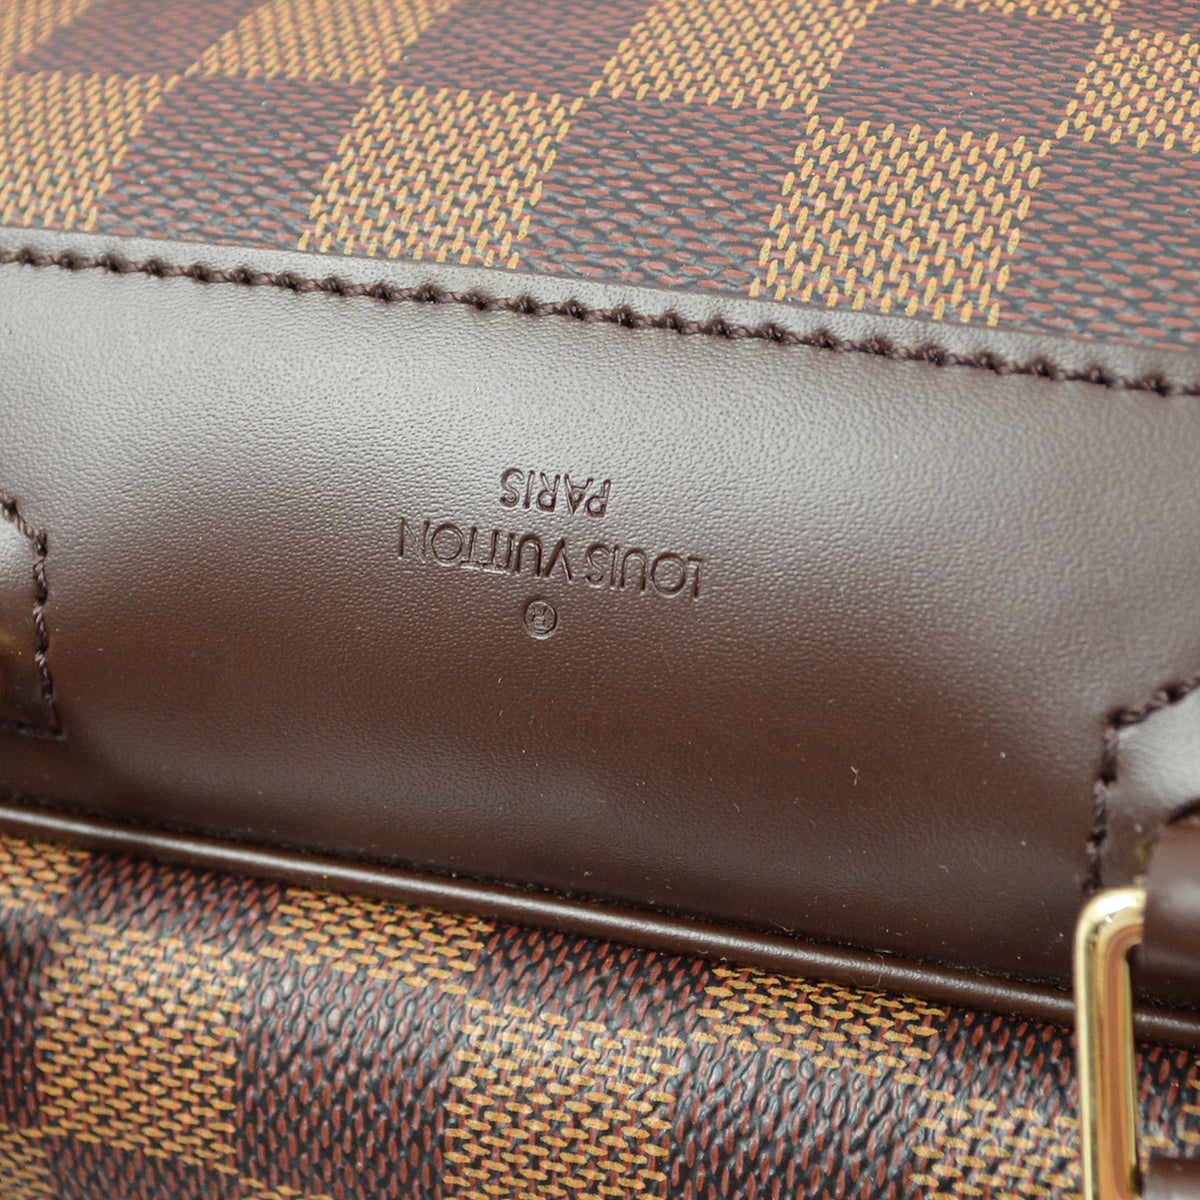 Louis Vuitton 2006 Damier Deauville Bowling Vanity Handbag N47272